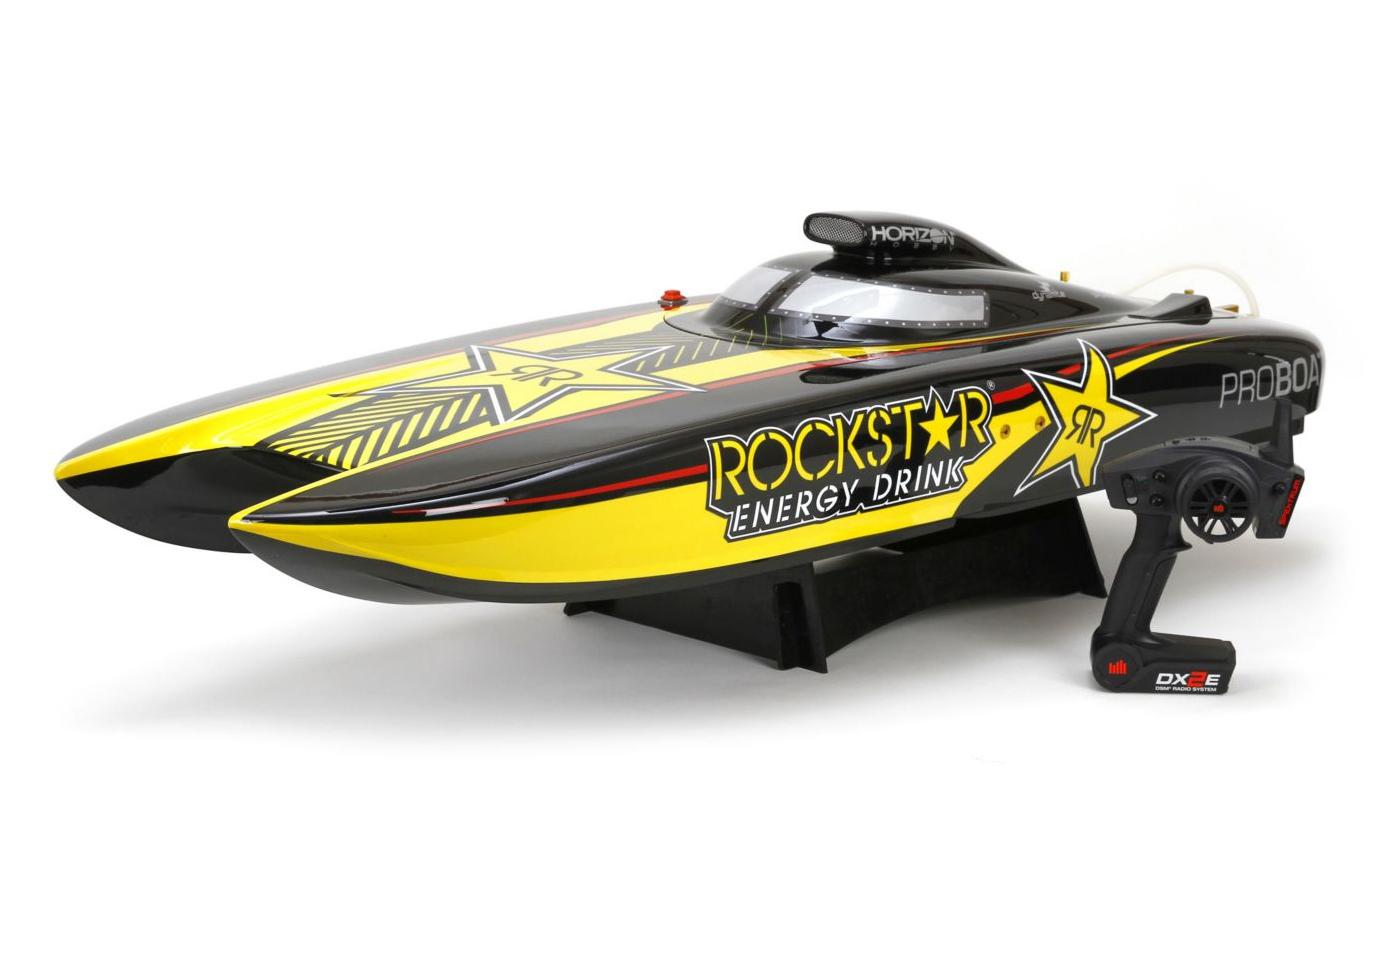  - ProBoat Rockstar 48-inch RTR ( )